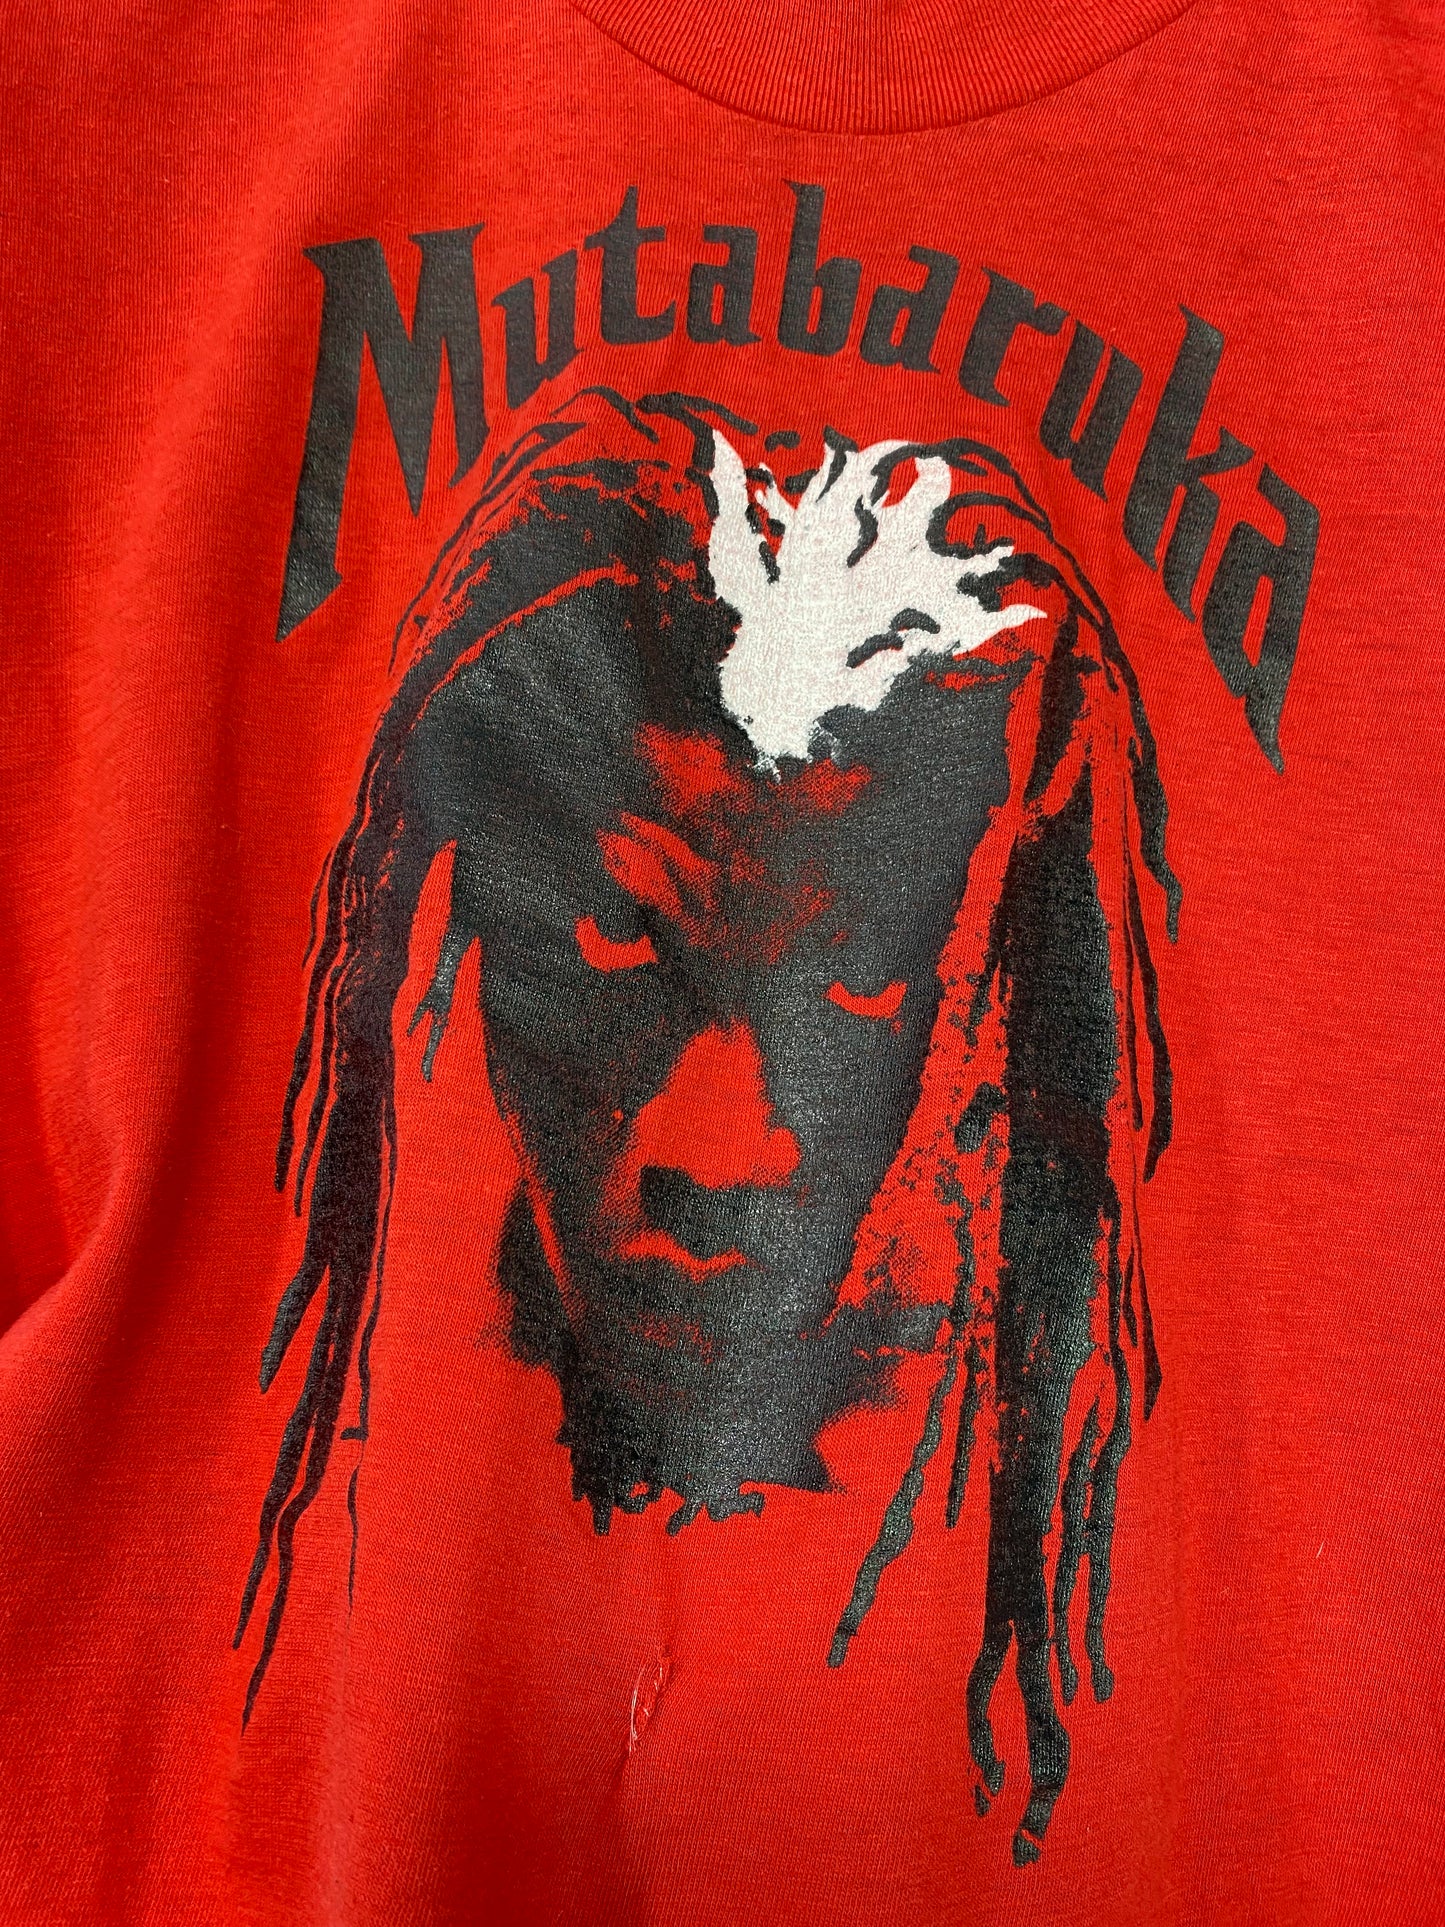 Vintage Mutabaruka T-Shirt Small